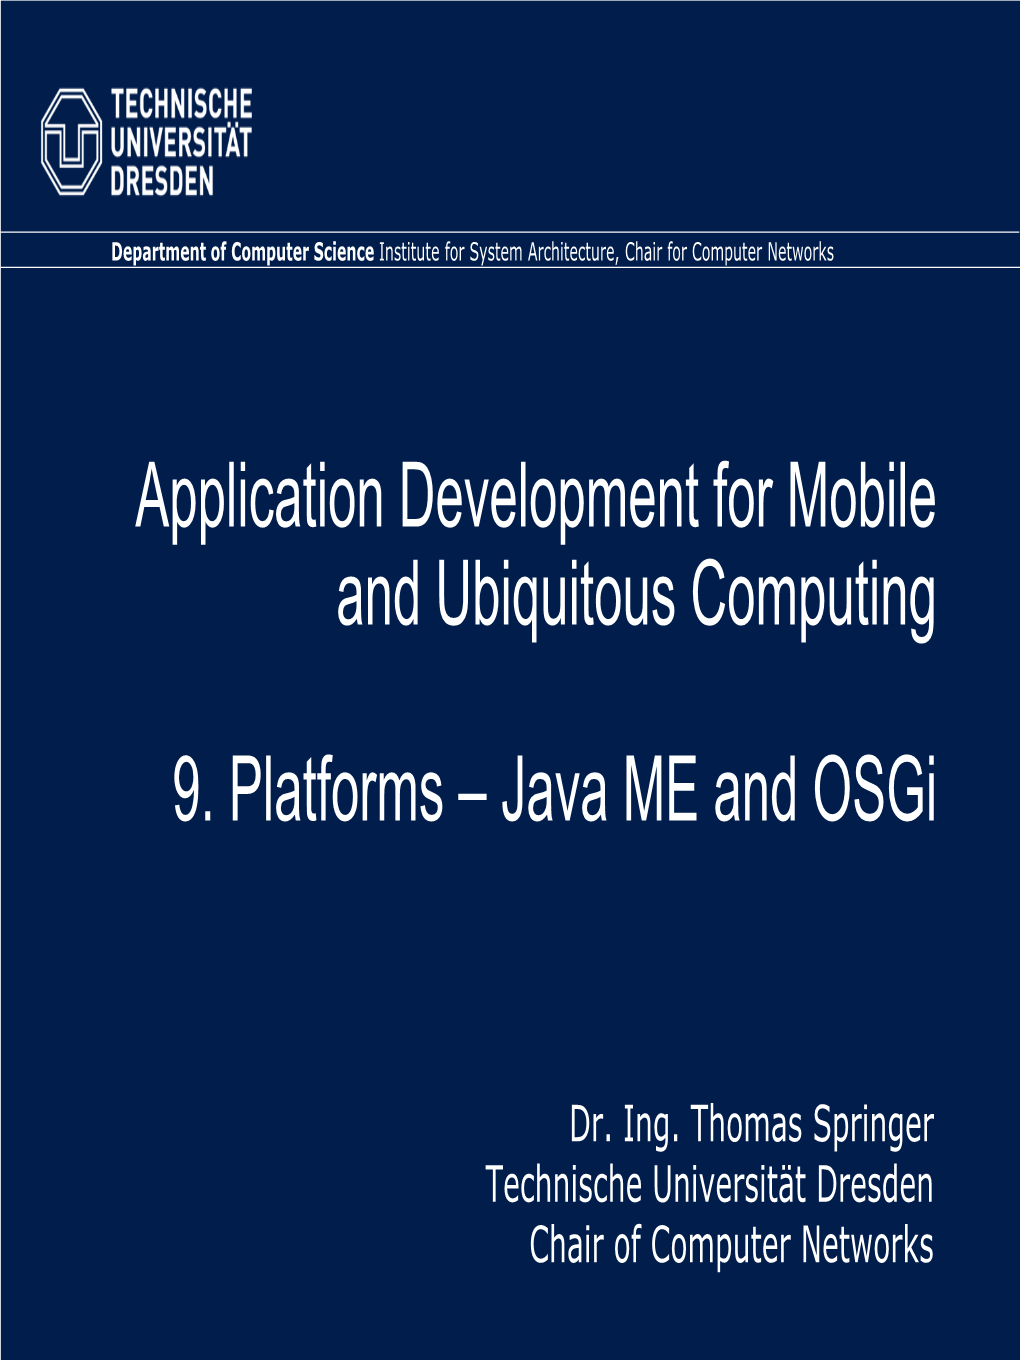 9. Platforms – Java ME and Osgi